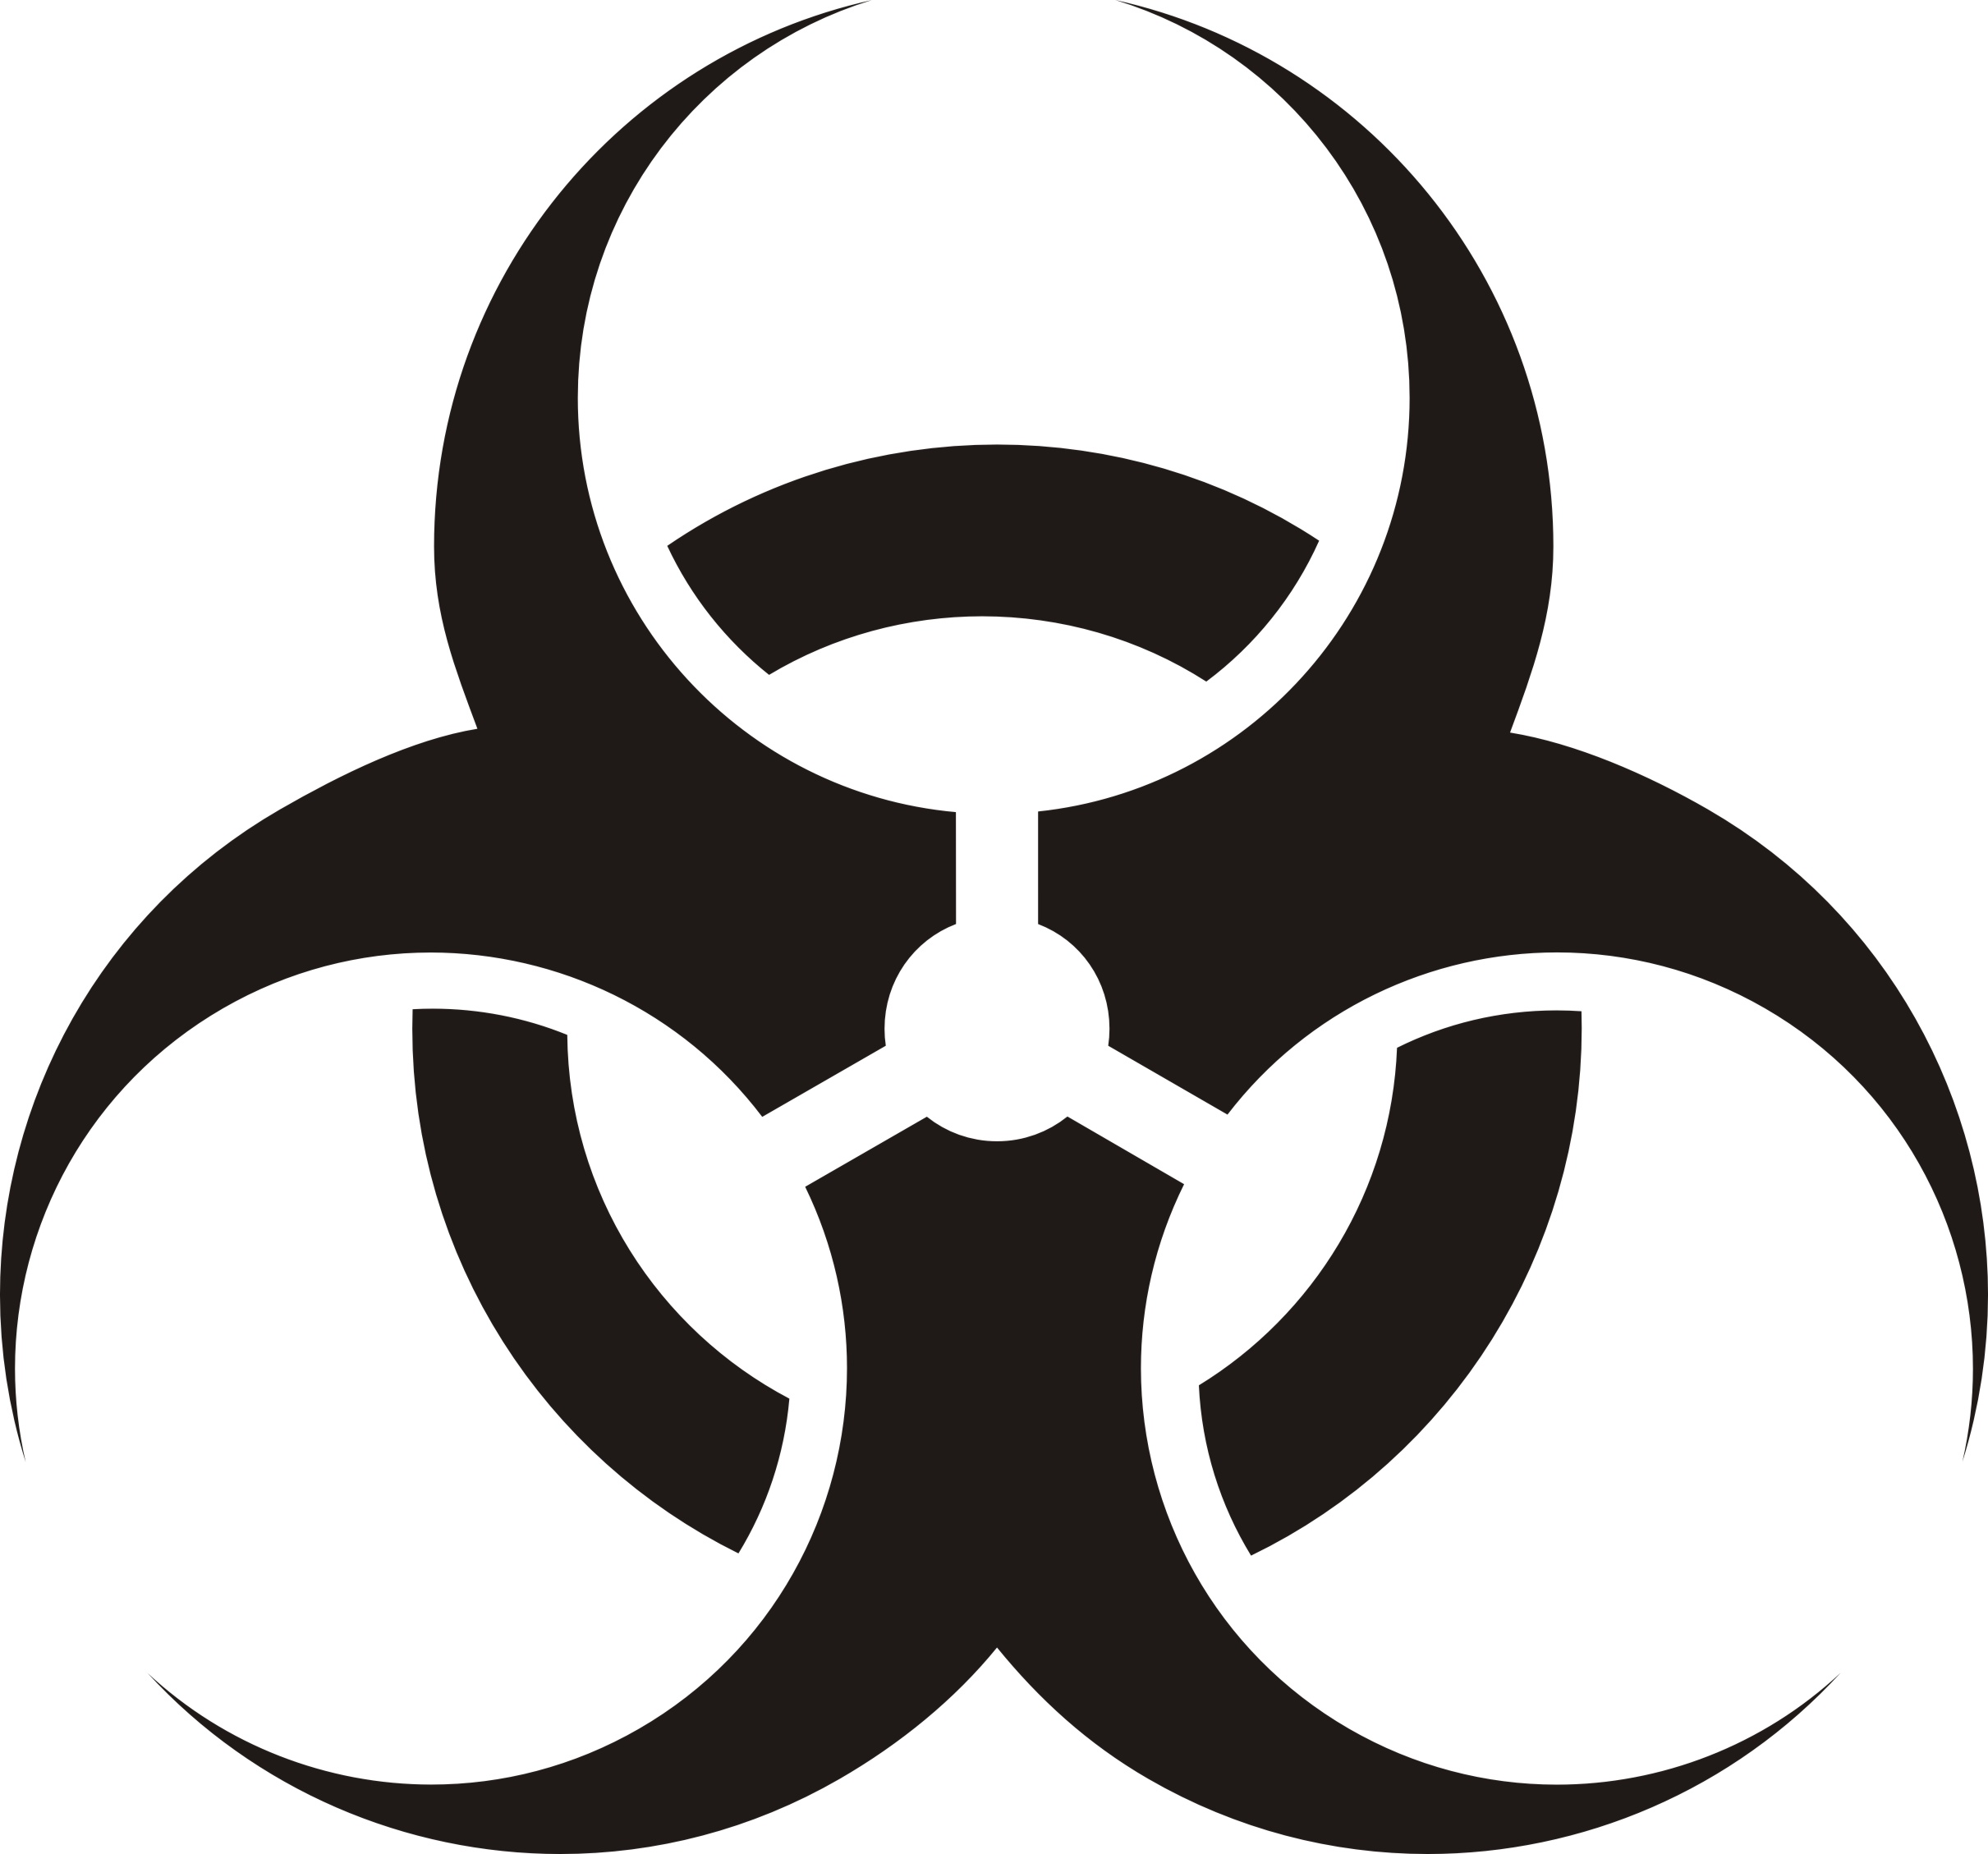 Cool Biohazard Symbols   Clipart Best